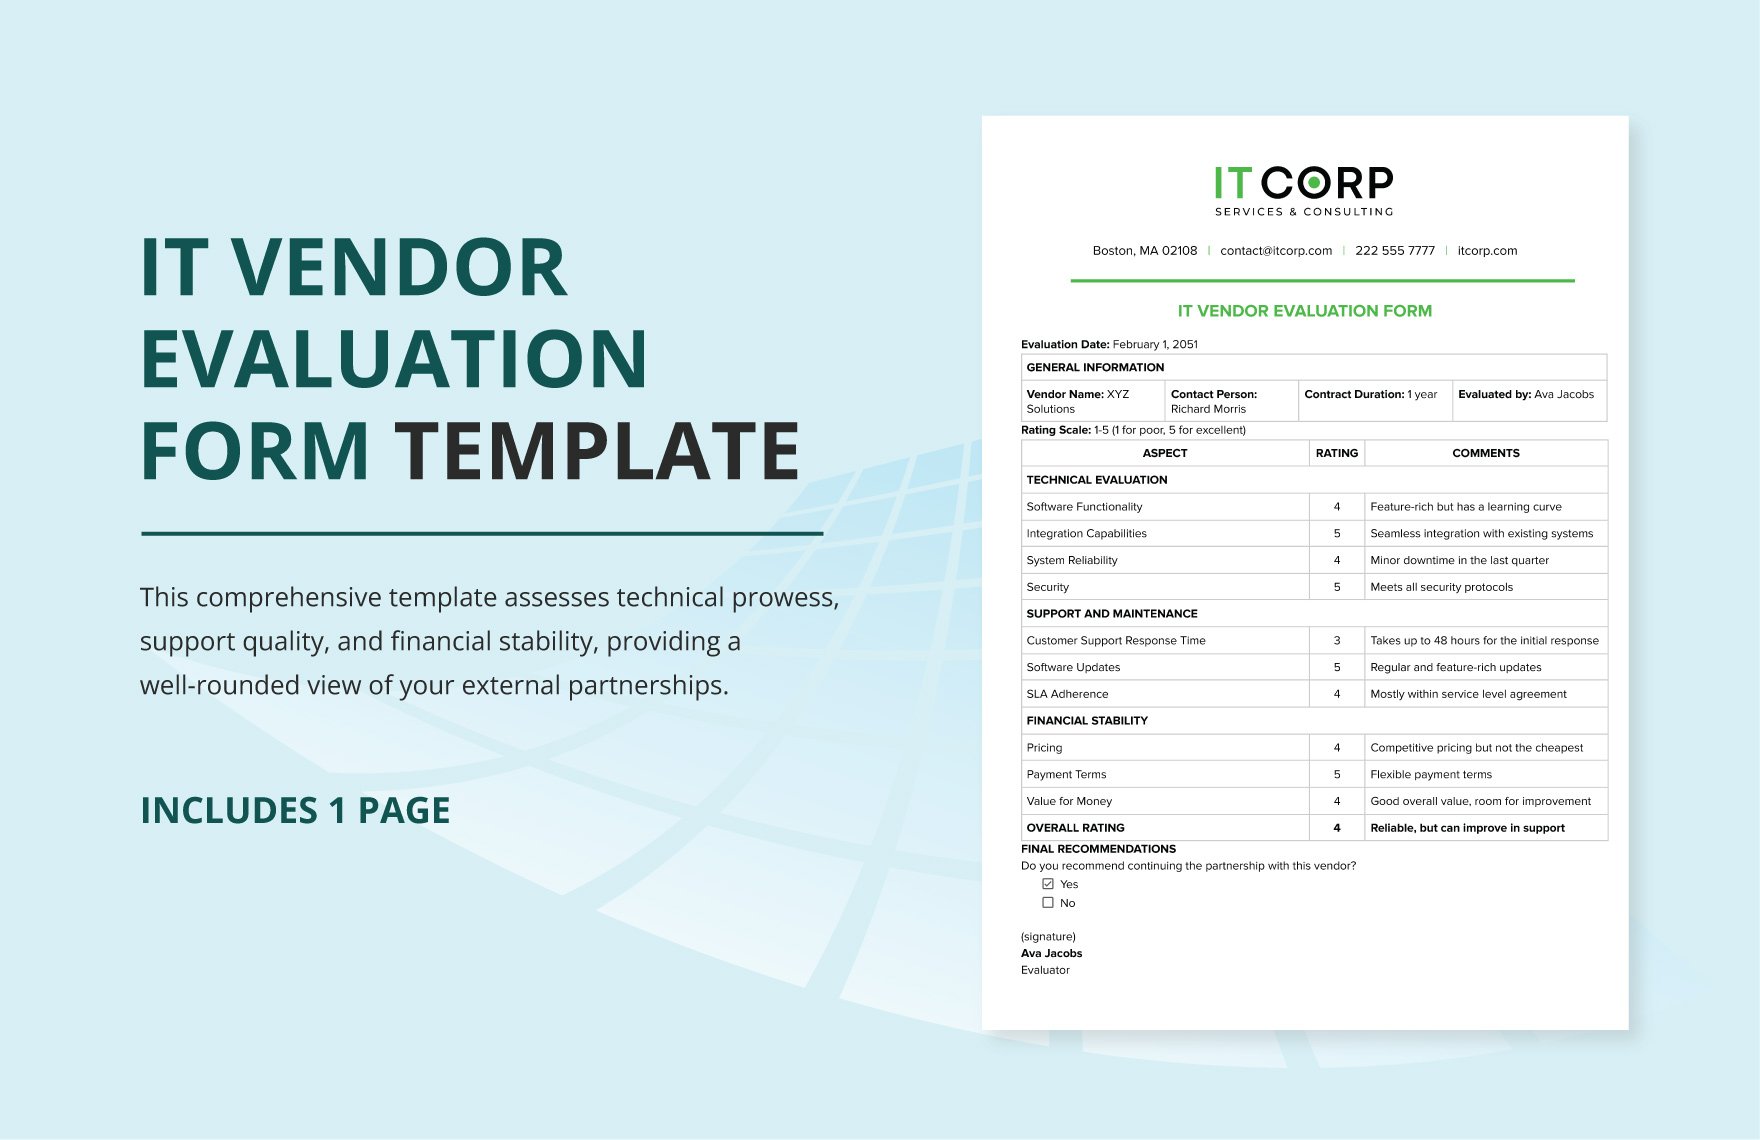 IT Vendor Evaluation Form Template